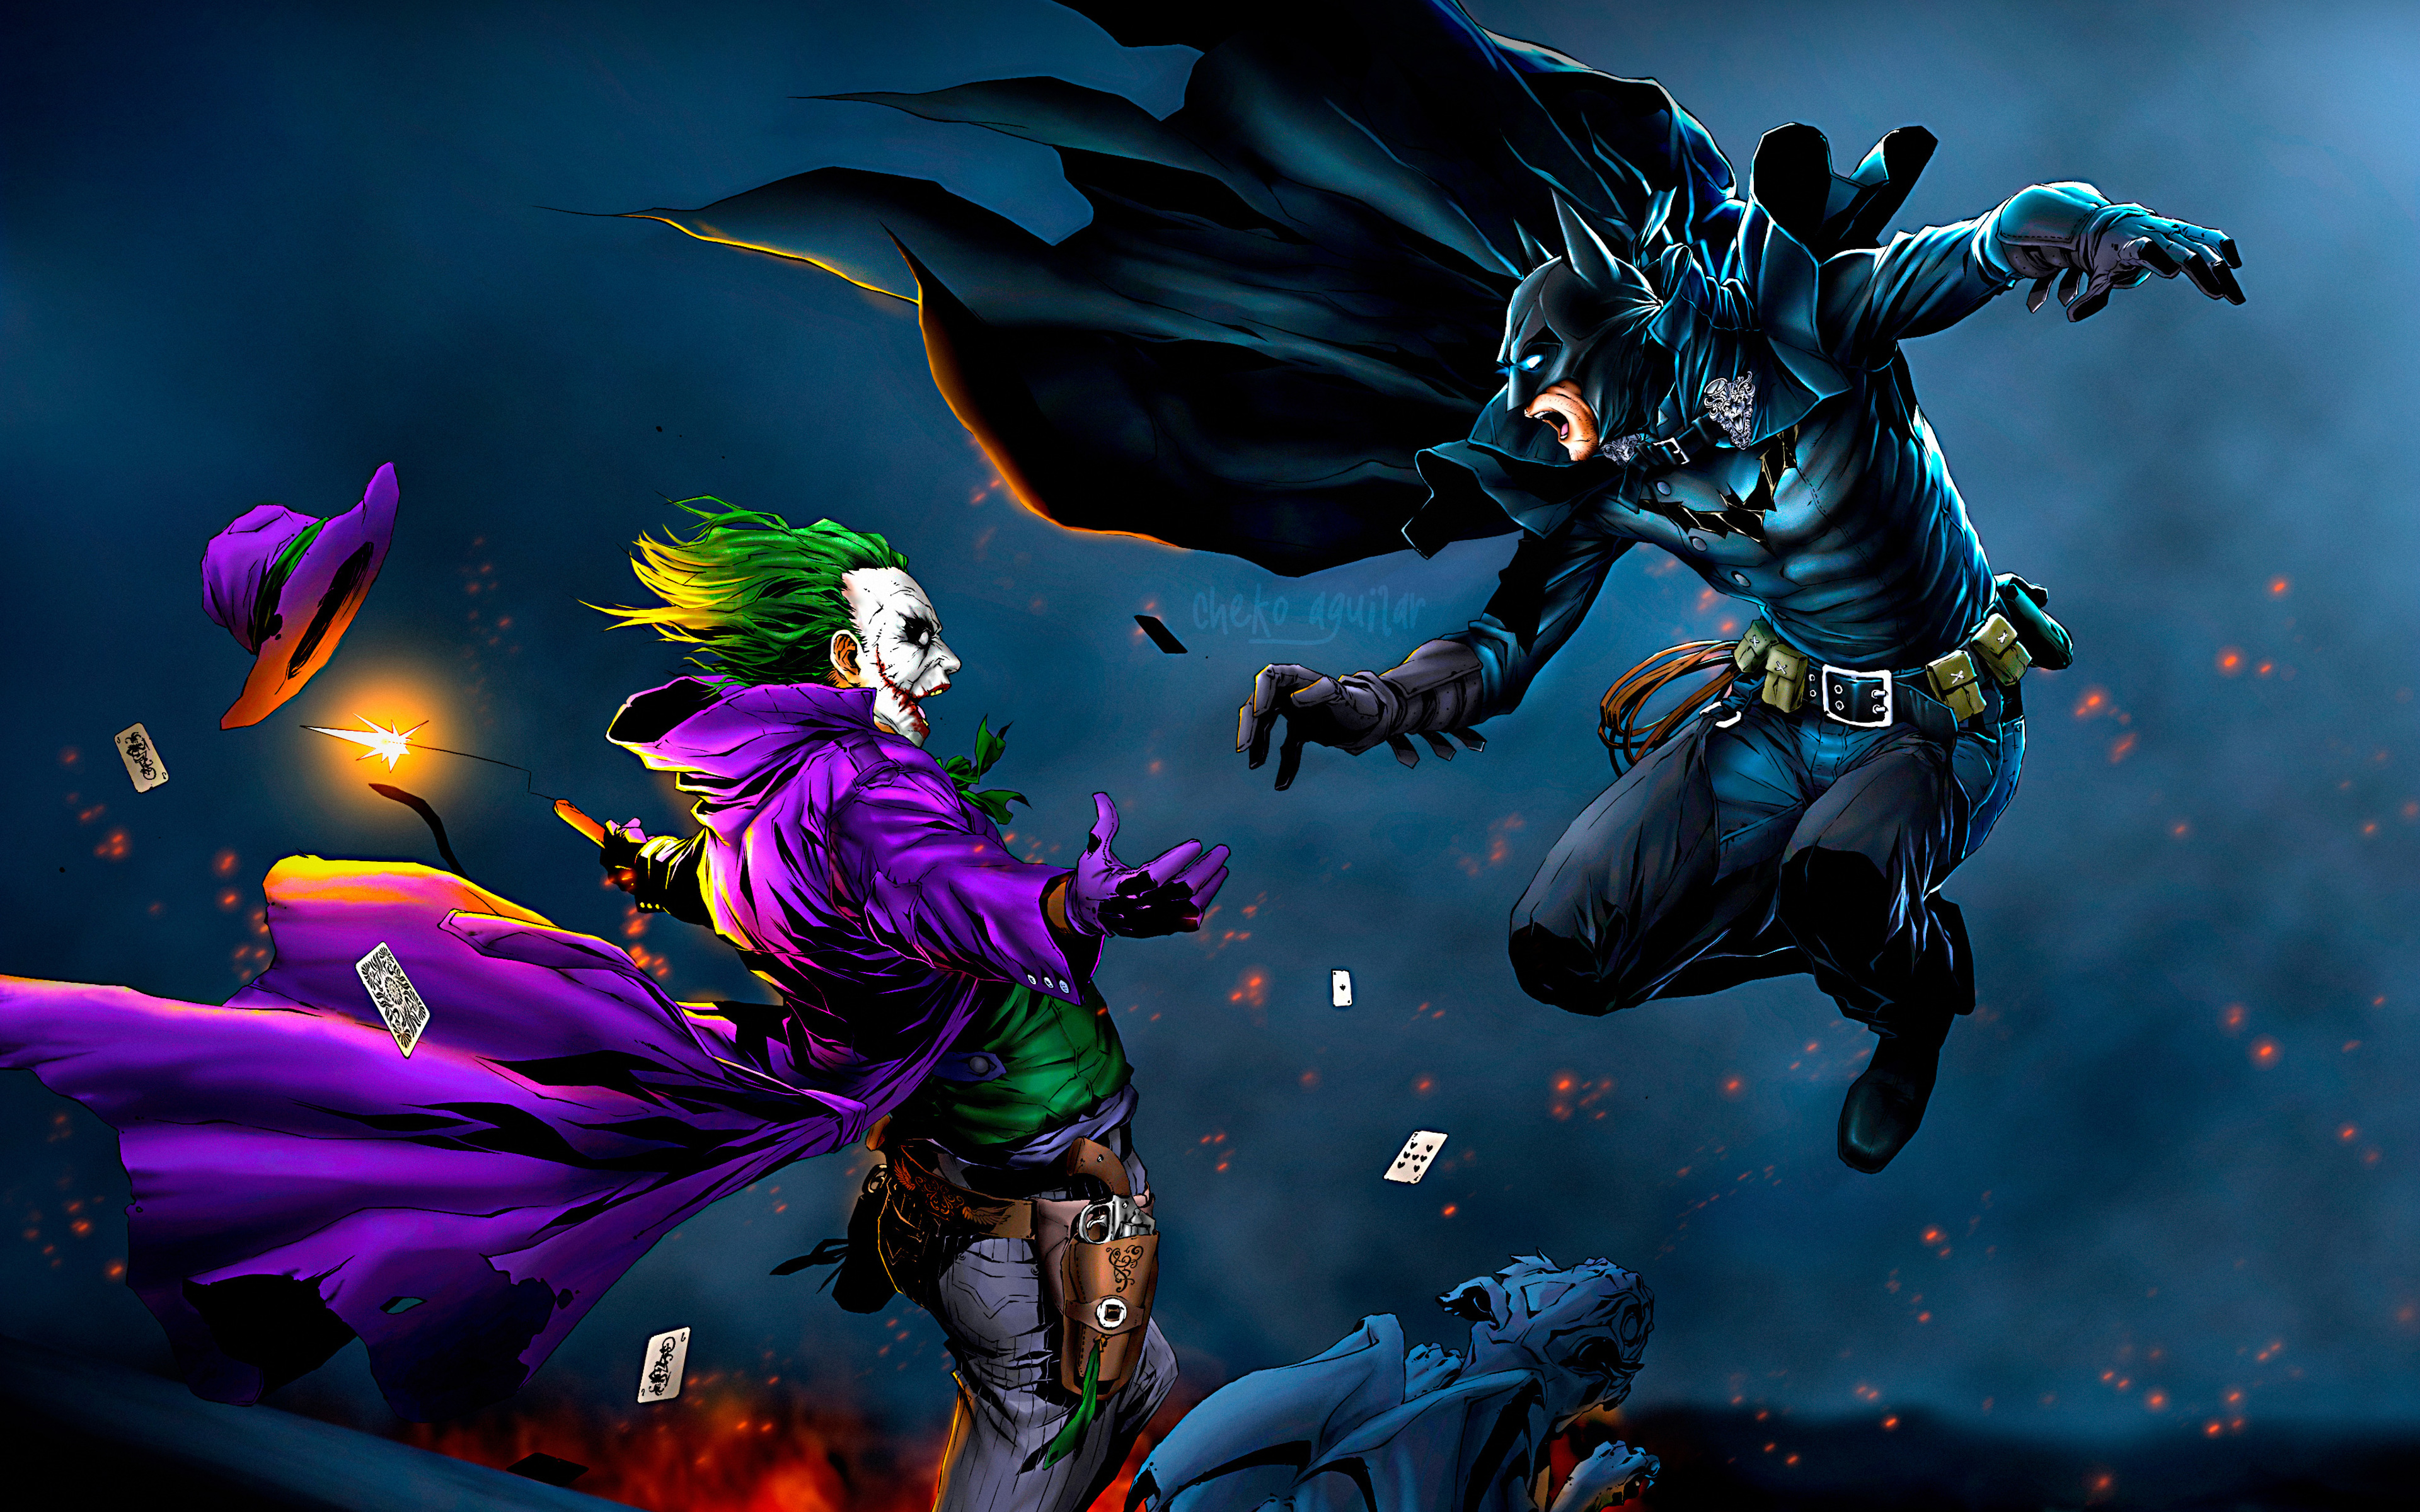 Download Wallpaper 4k, Batman Vs Joker, Battle, Superheroe Vs Anti Hero, Joker, Batman For Desktop With Resolution 3840x2400. High Quality HD Picture Wallpaper